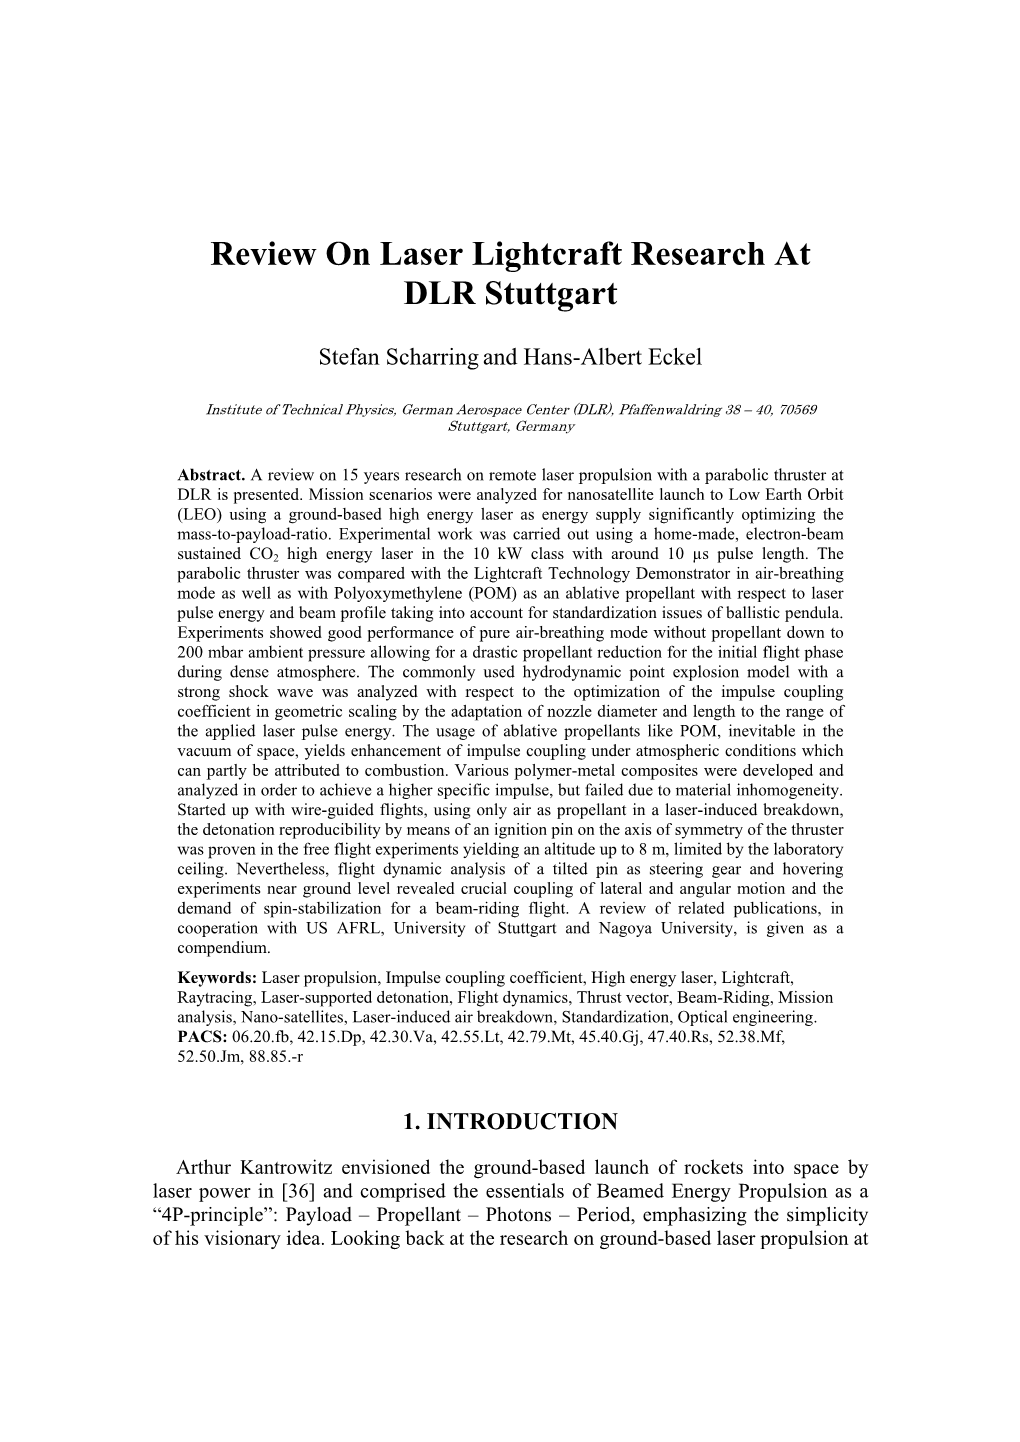 Review on Laser Lightcraft Research at DLR Stuttgart